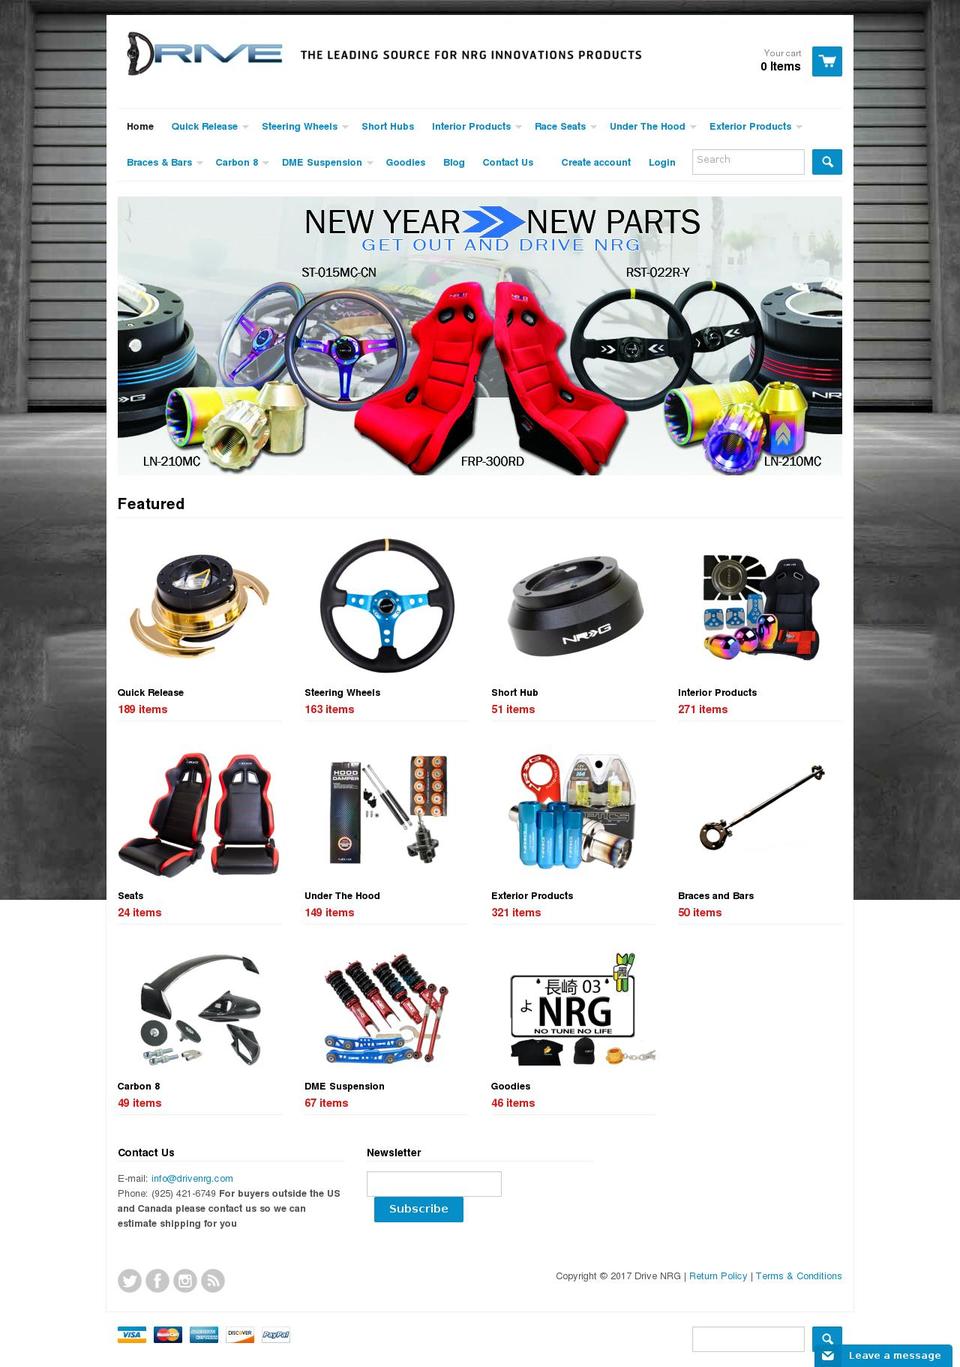 React Shopify theme site example drivenrg.com